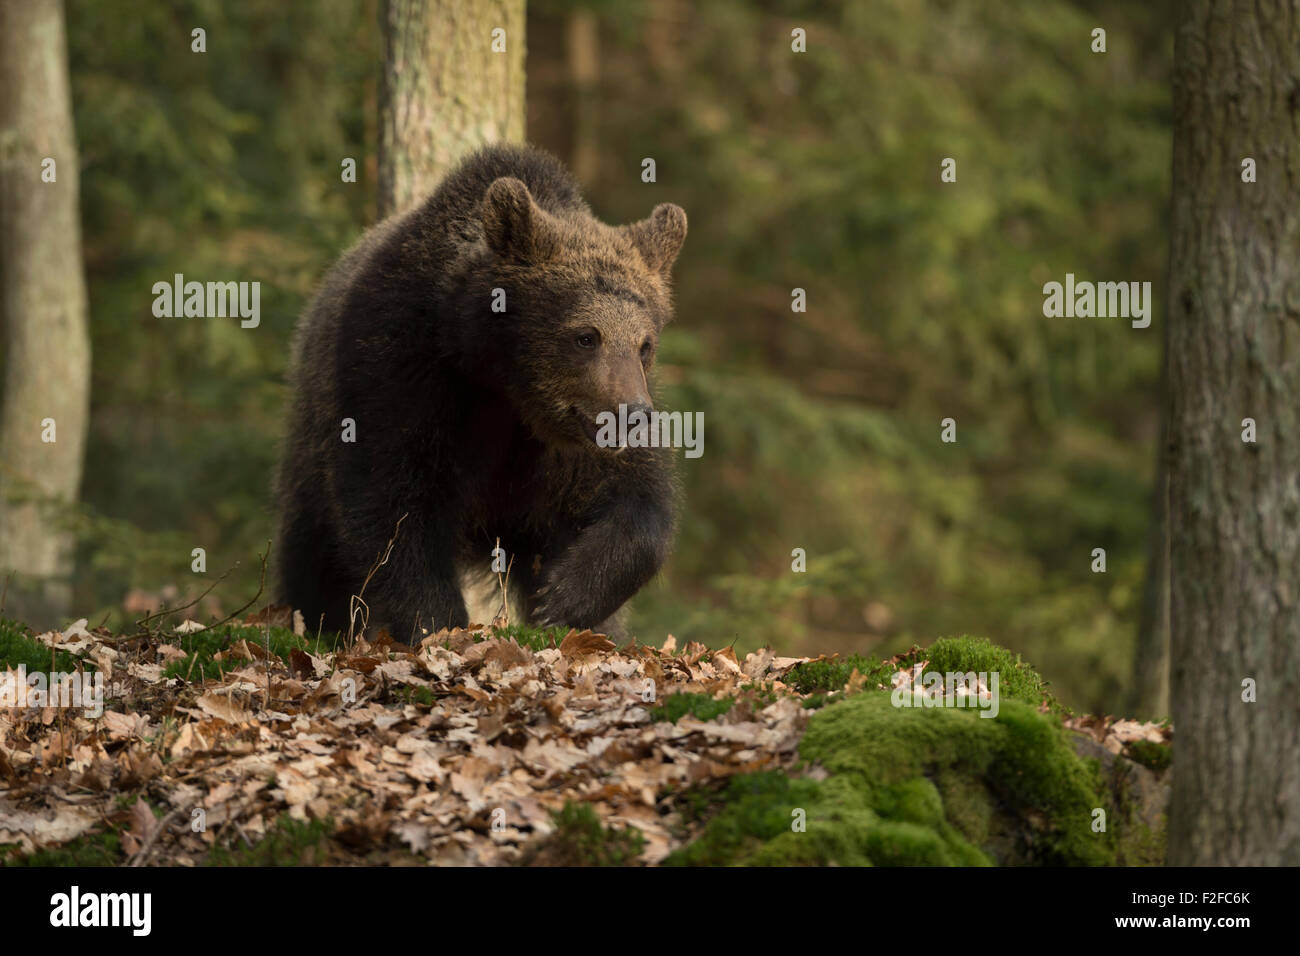 Unione orso bruno / Europäischer Braunbär ( Ursus arctos ) cammina, corre attraverso una foresta con foglie avvizzite coperto la terra. Foto Stock